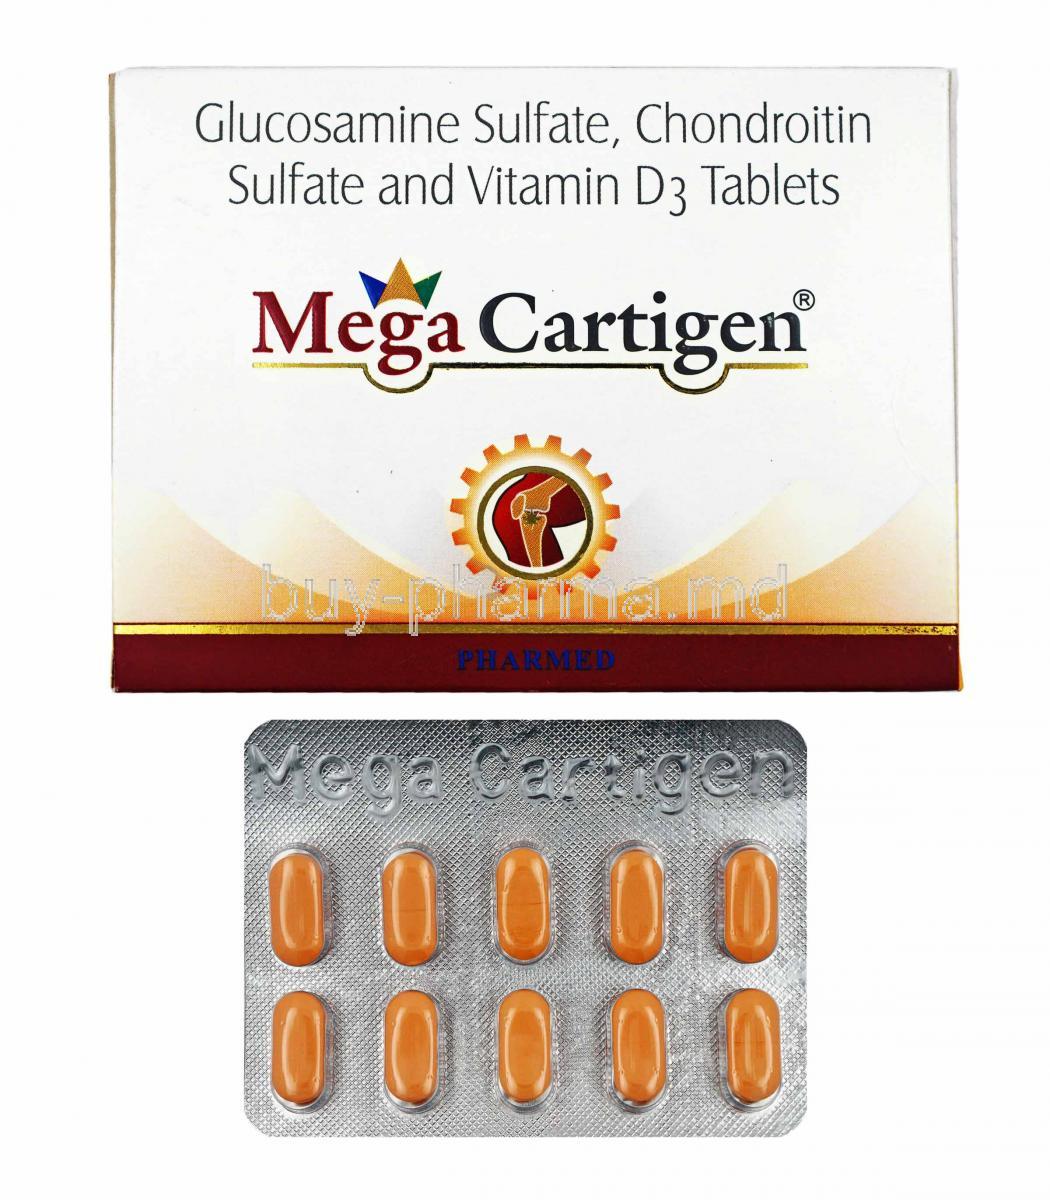 Mega Cartigen, Potassium Chloride, Chondroitin Sulfate Sodium and Vitamin D3 box and tablets